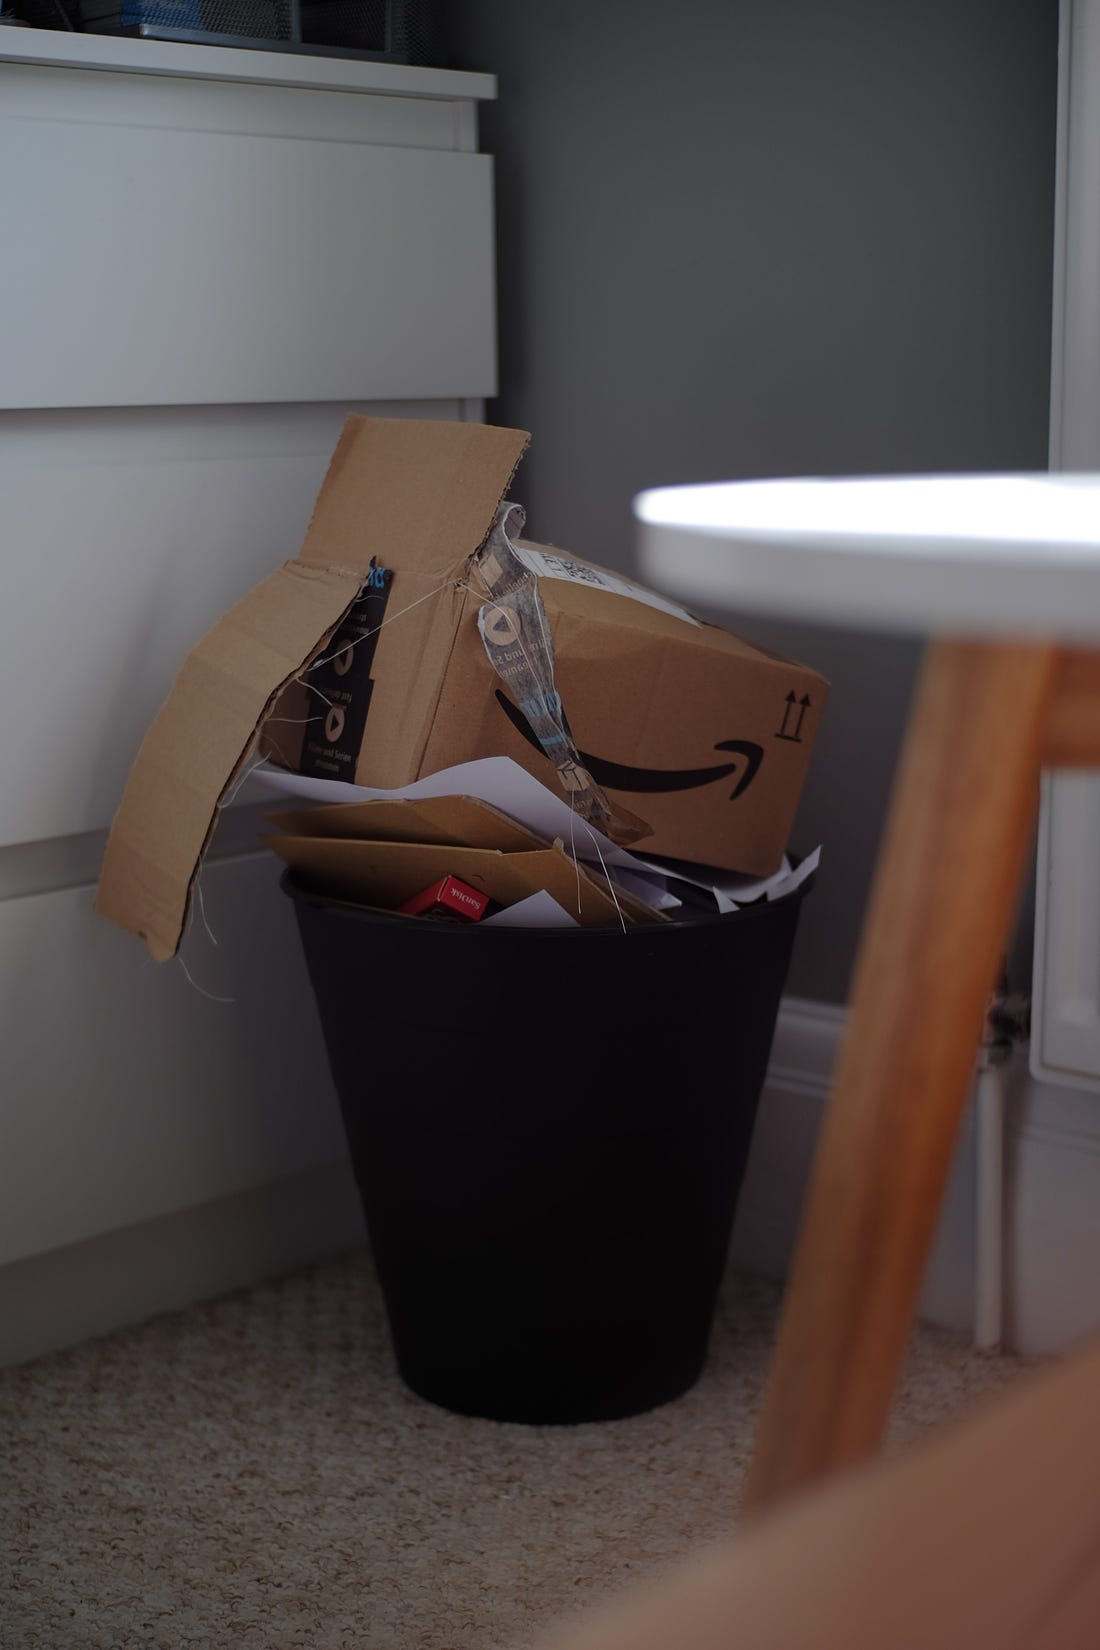 Photo of an Amazon box in the trash. (Sean Robbins / Unsplash)